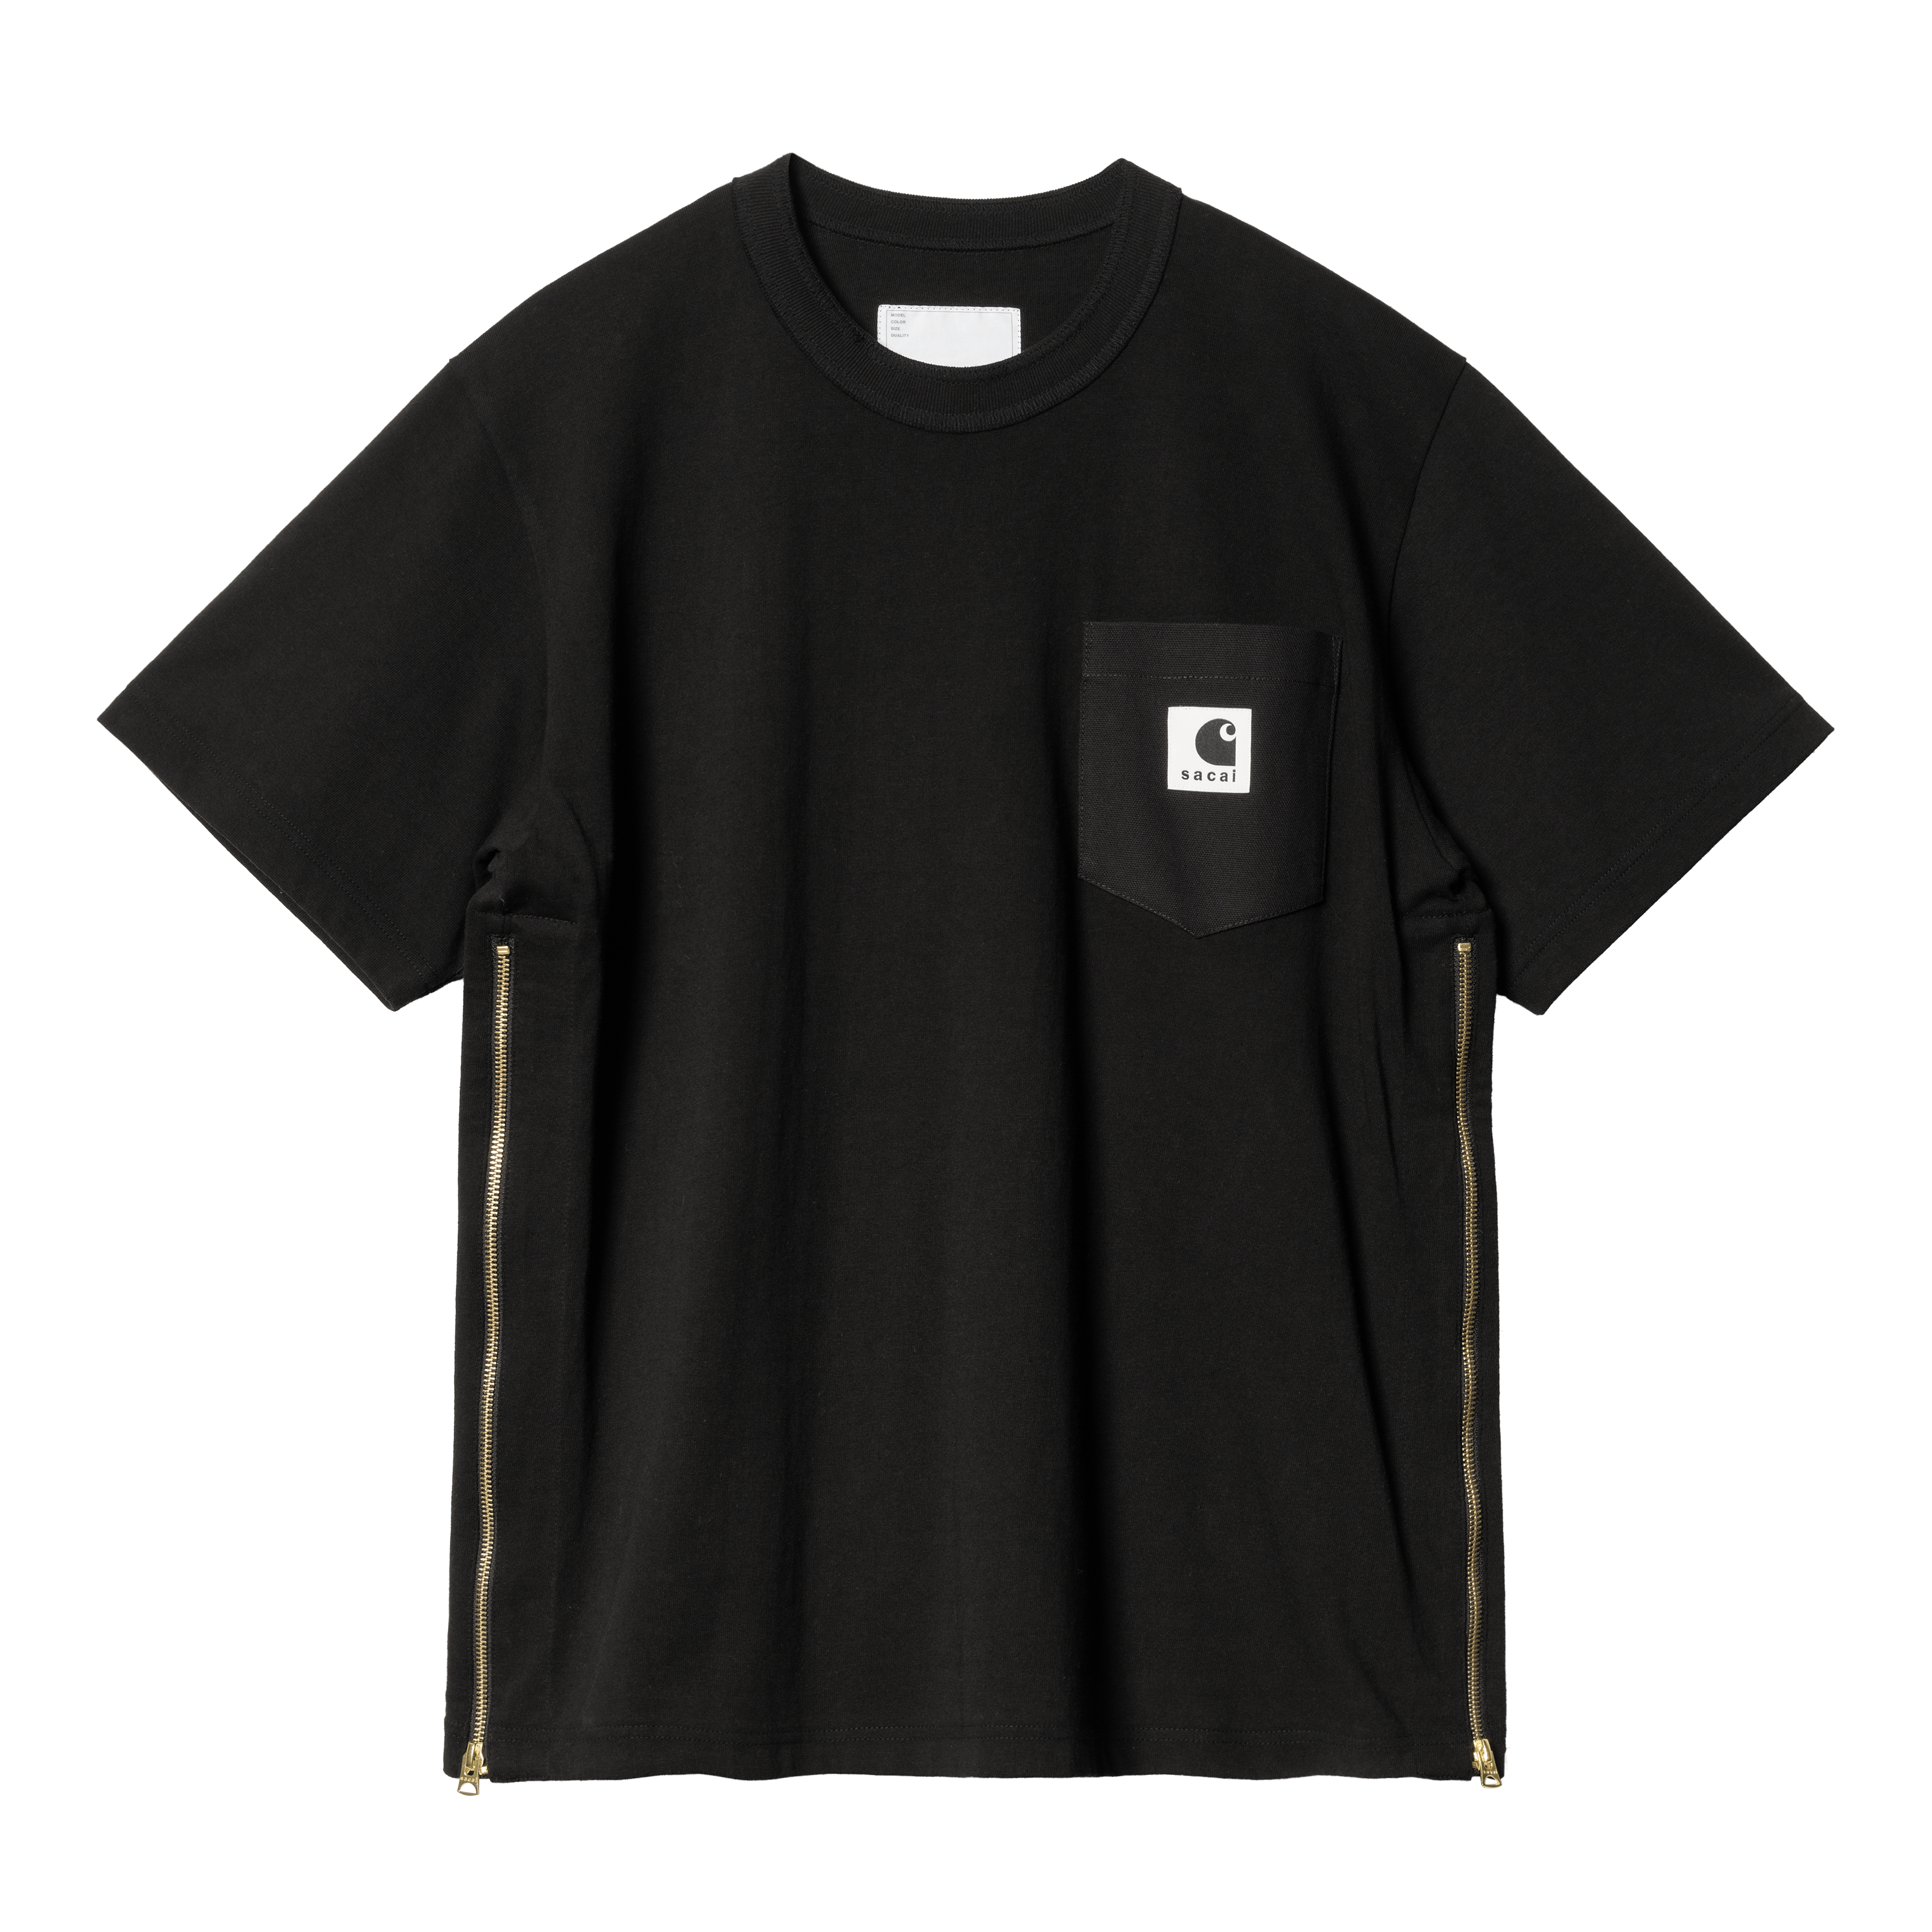 Carhartt WIP sacai x Carhartt WIP T-Shirt in Black